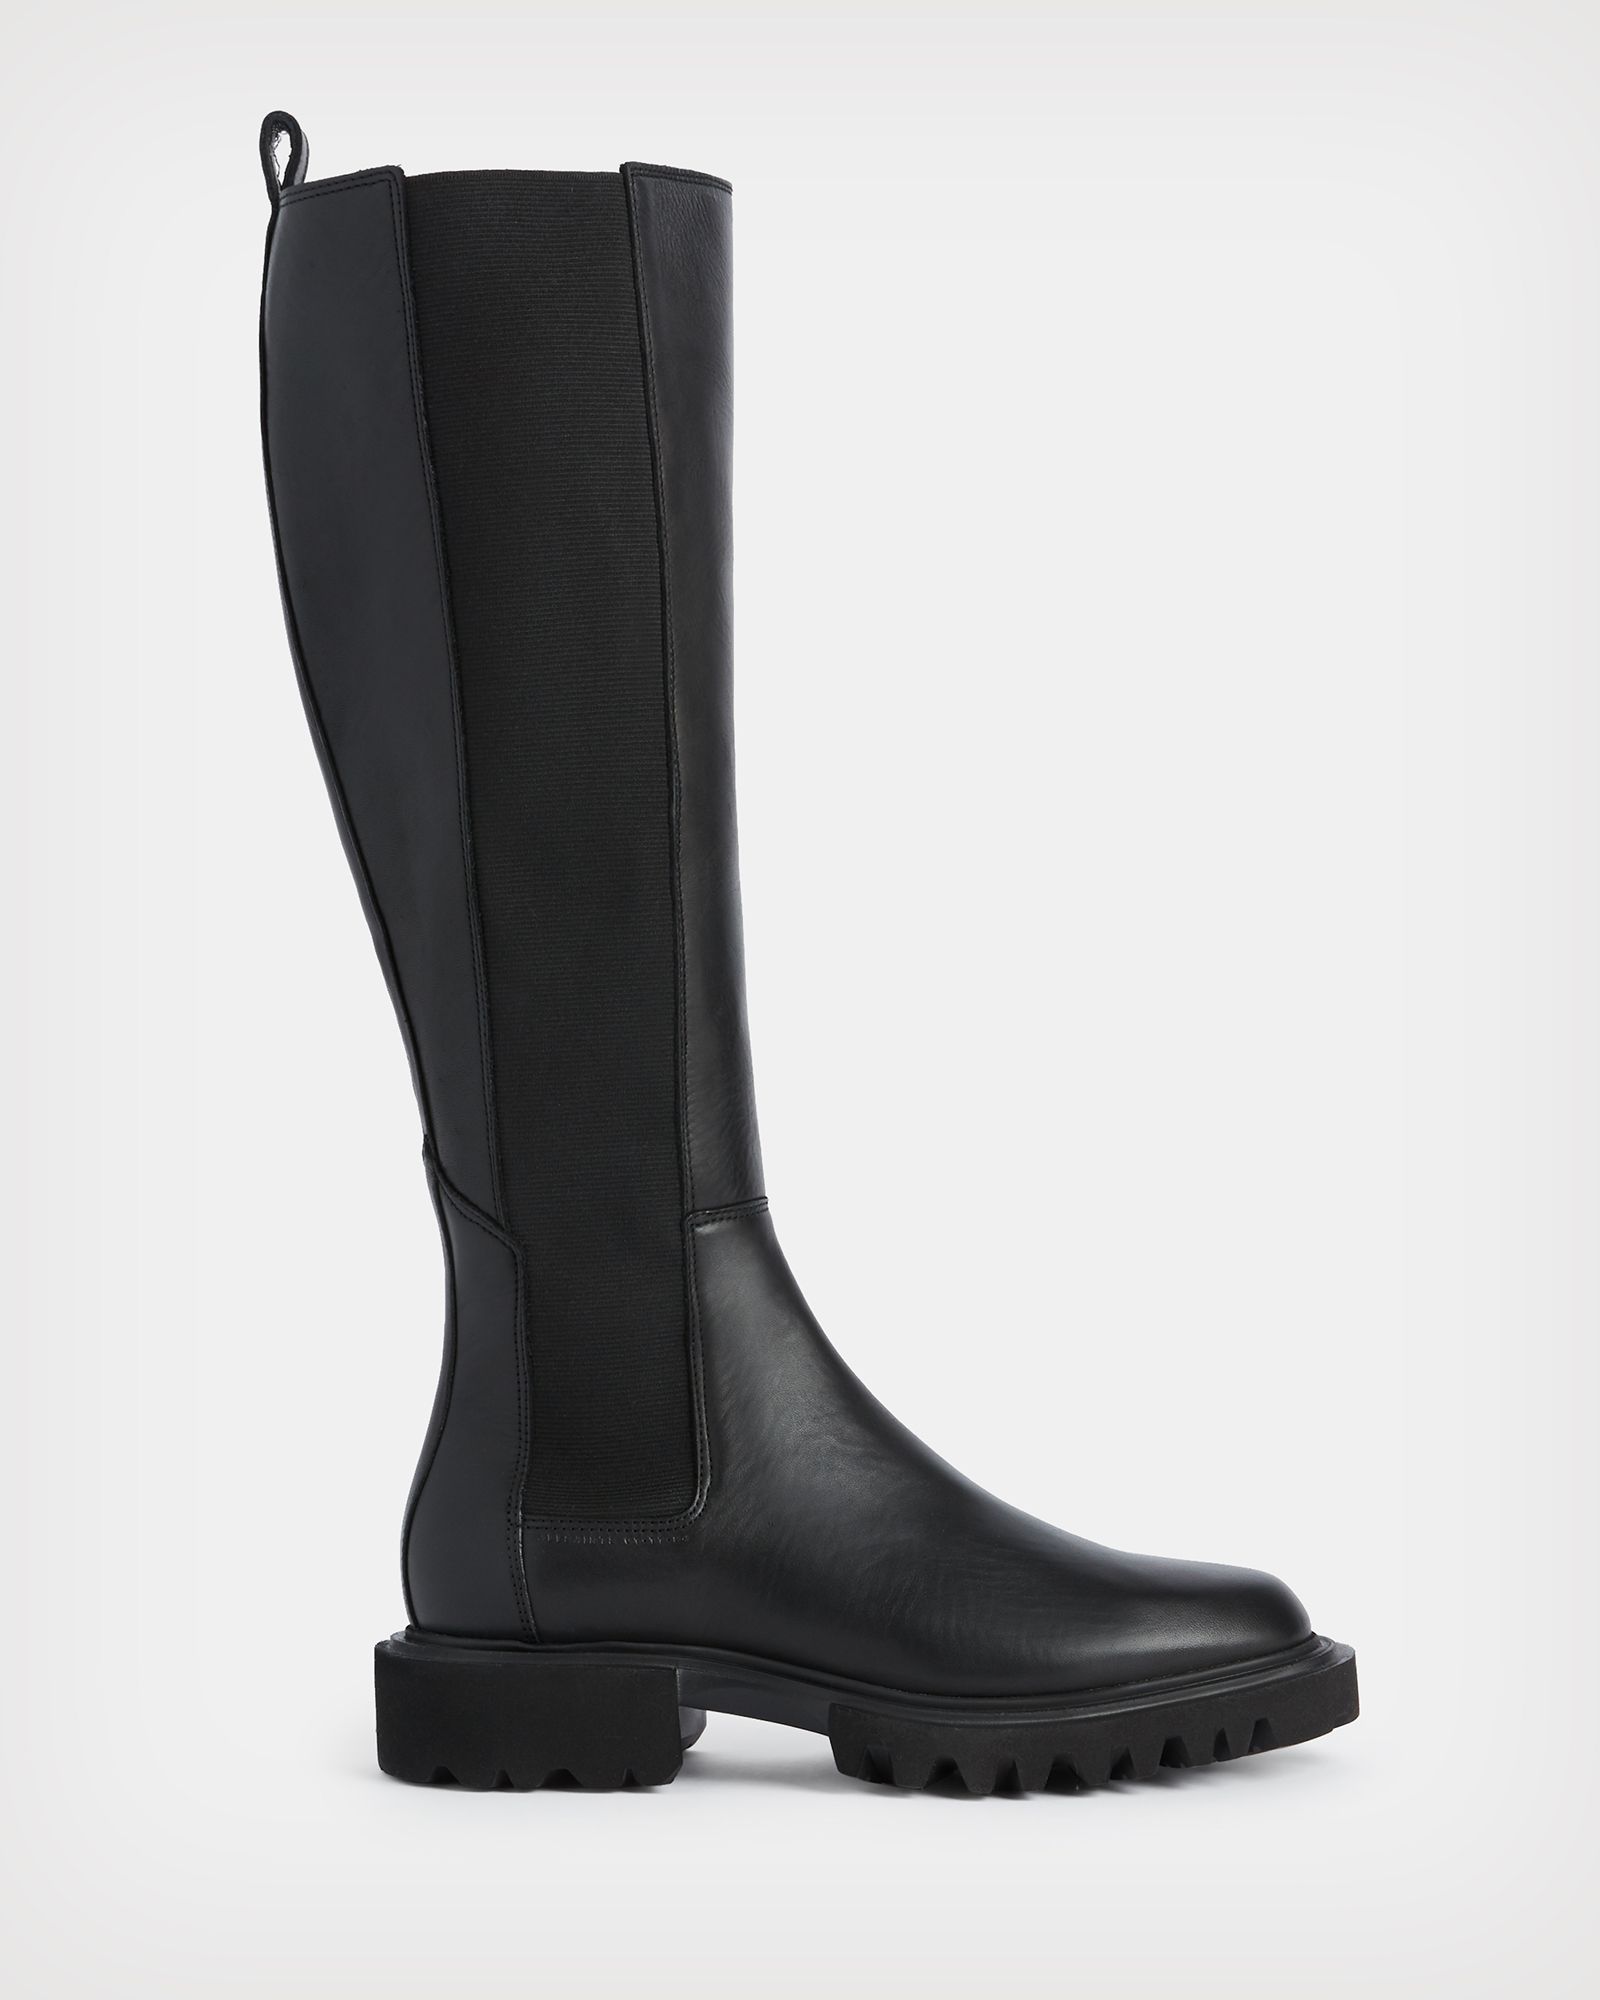 Maeve Leather Boots | AllSaints UK